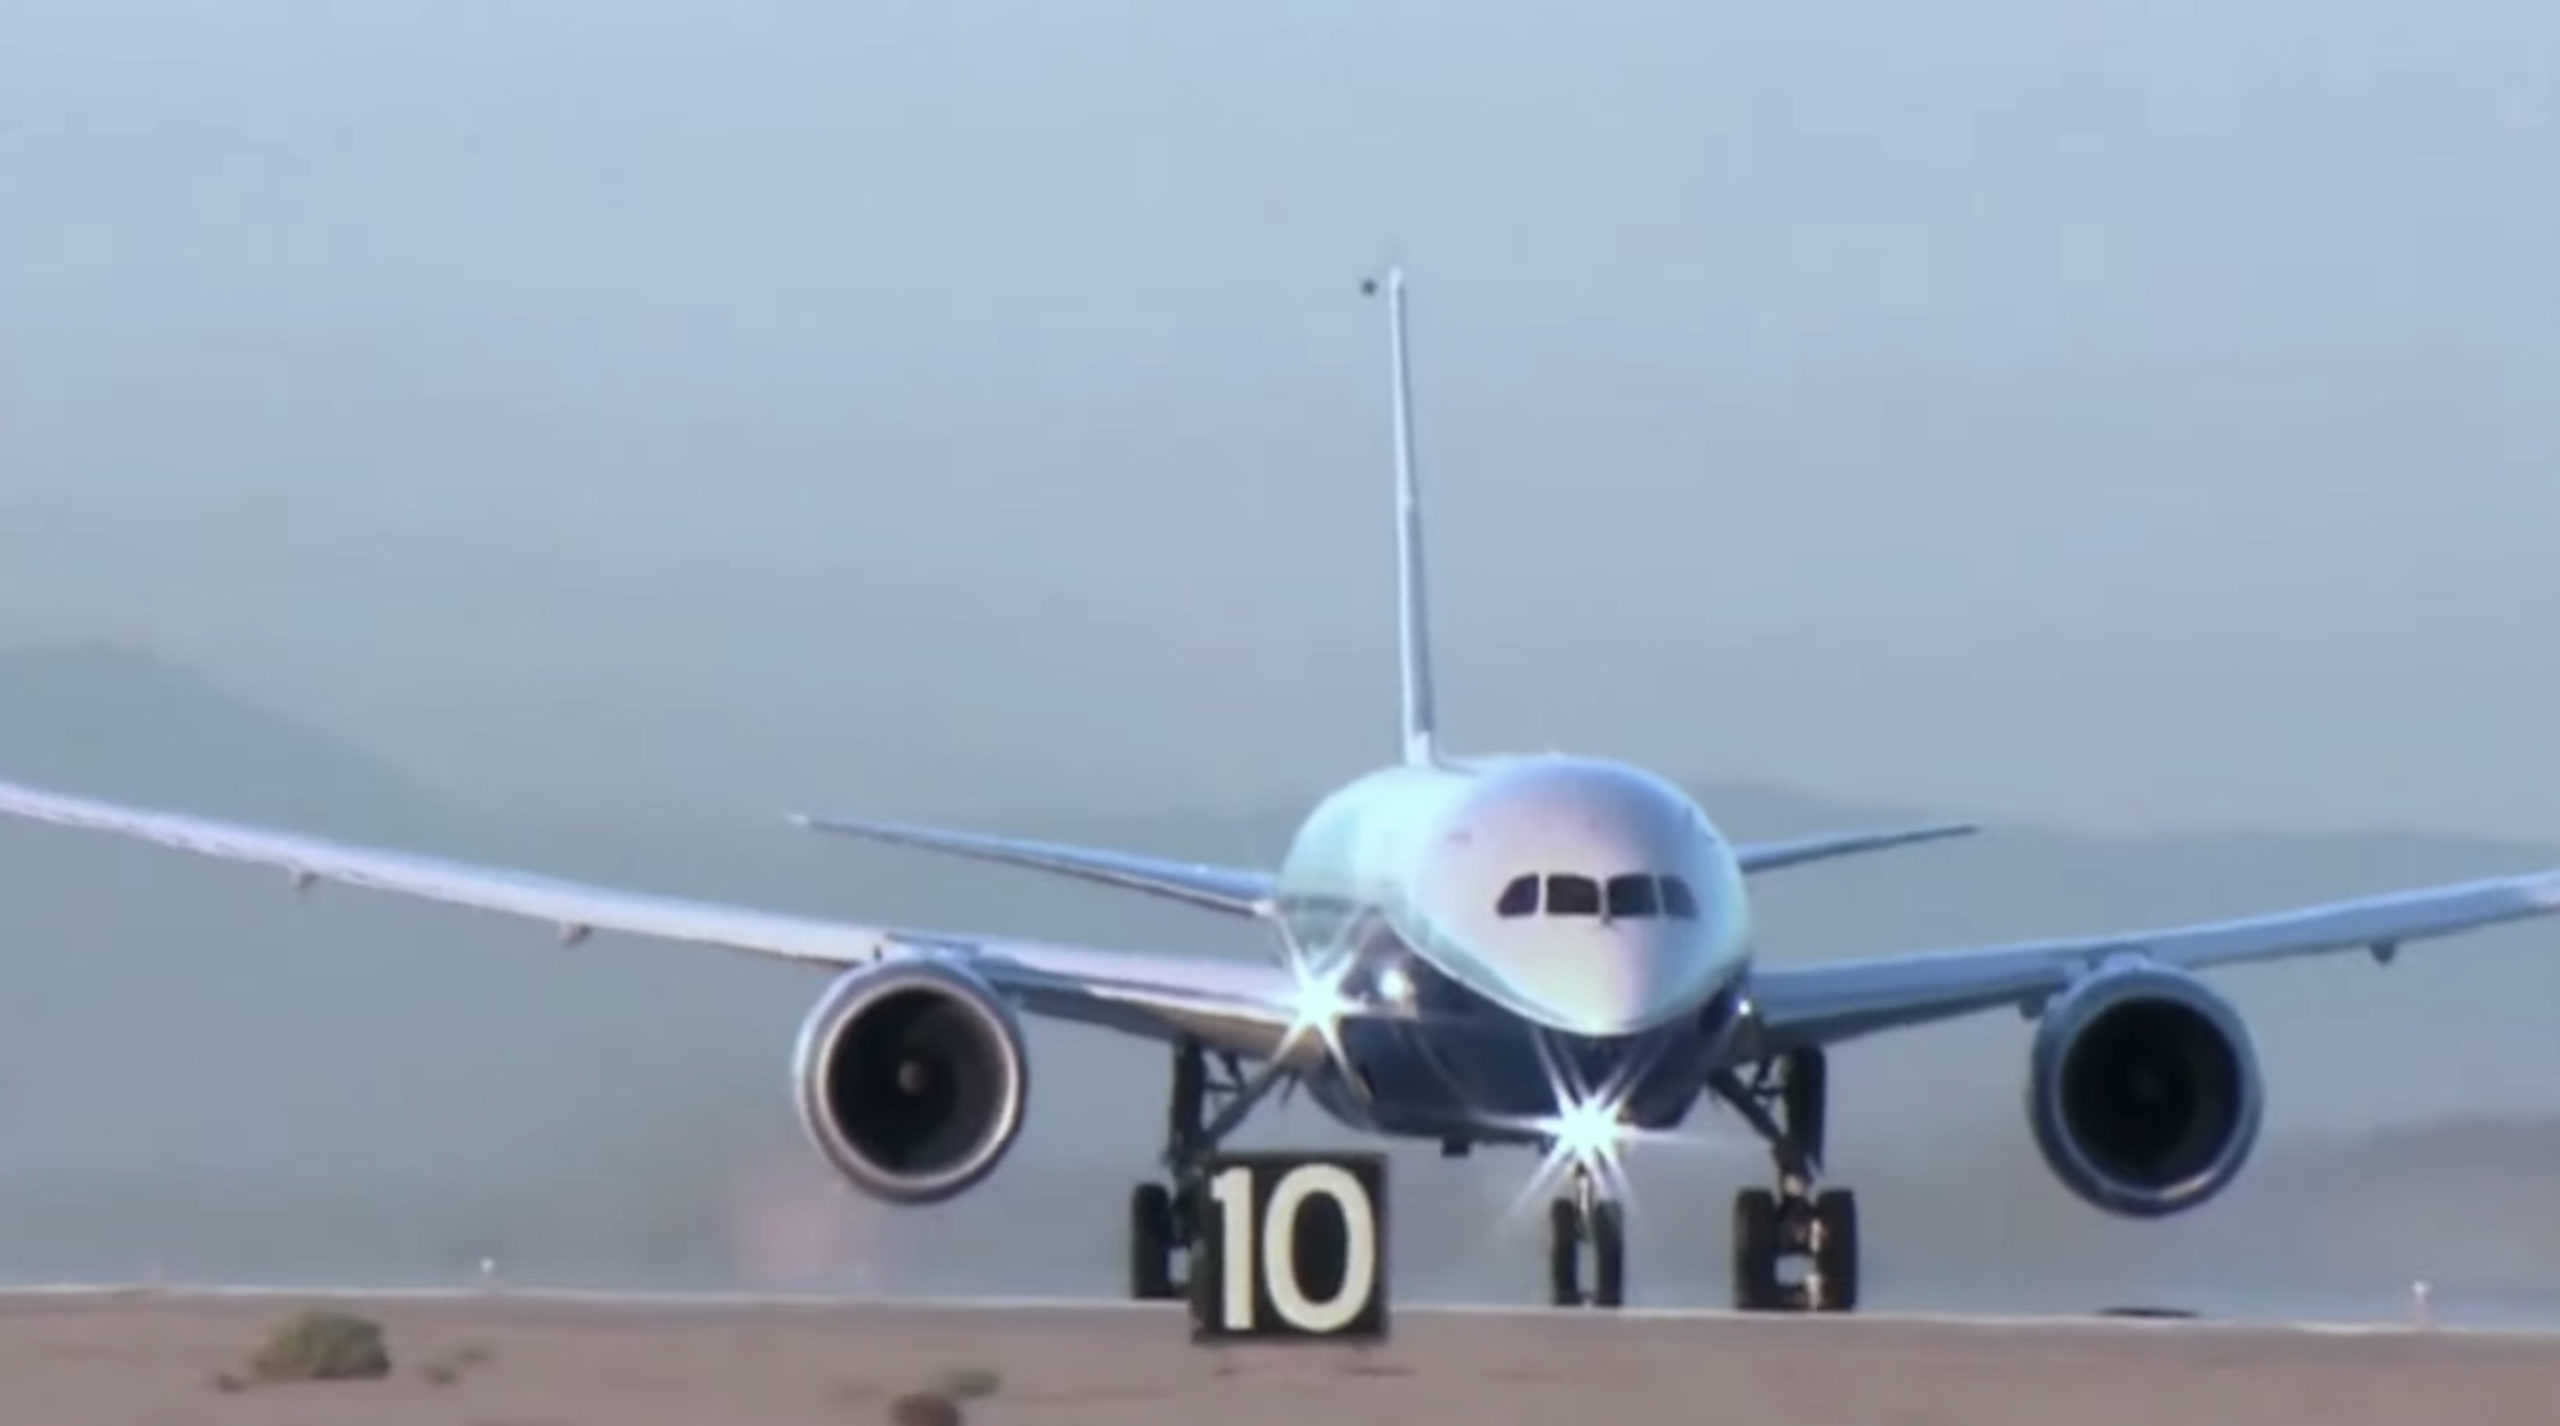 A plane landing on a runway